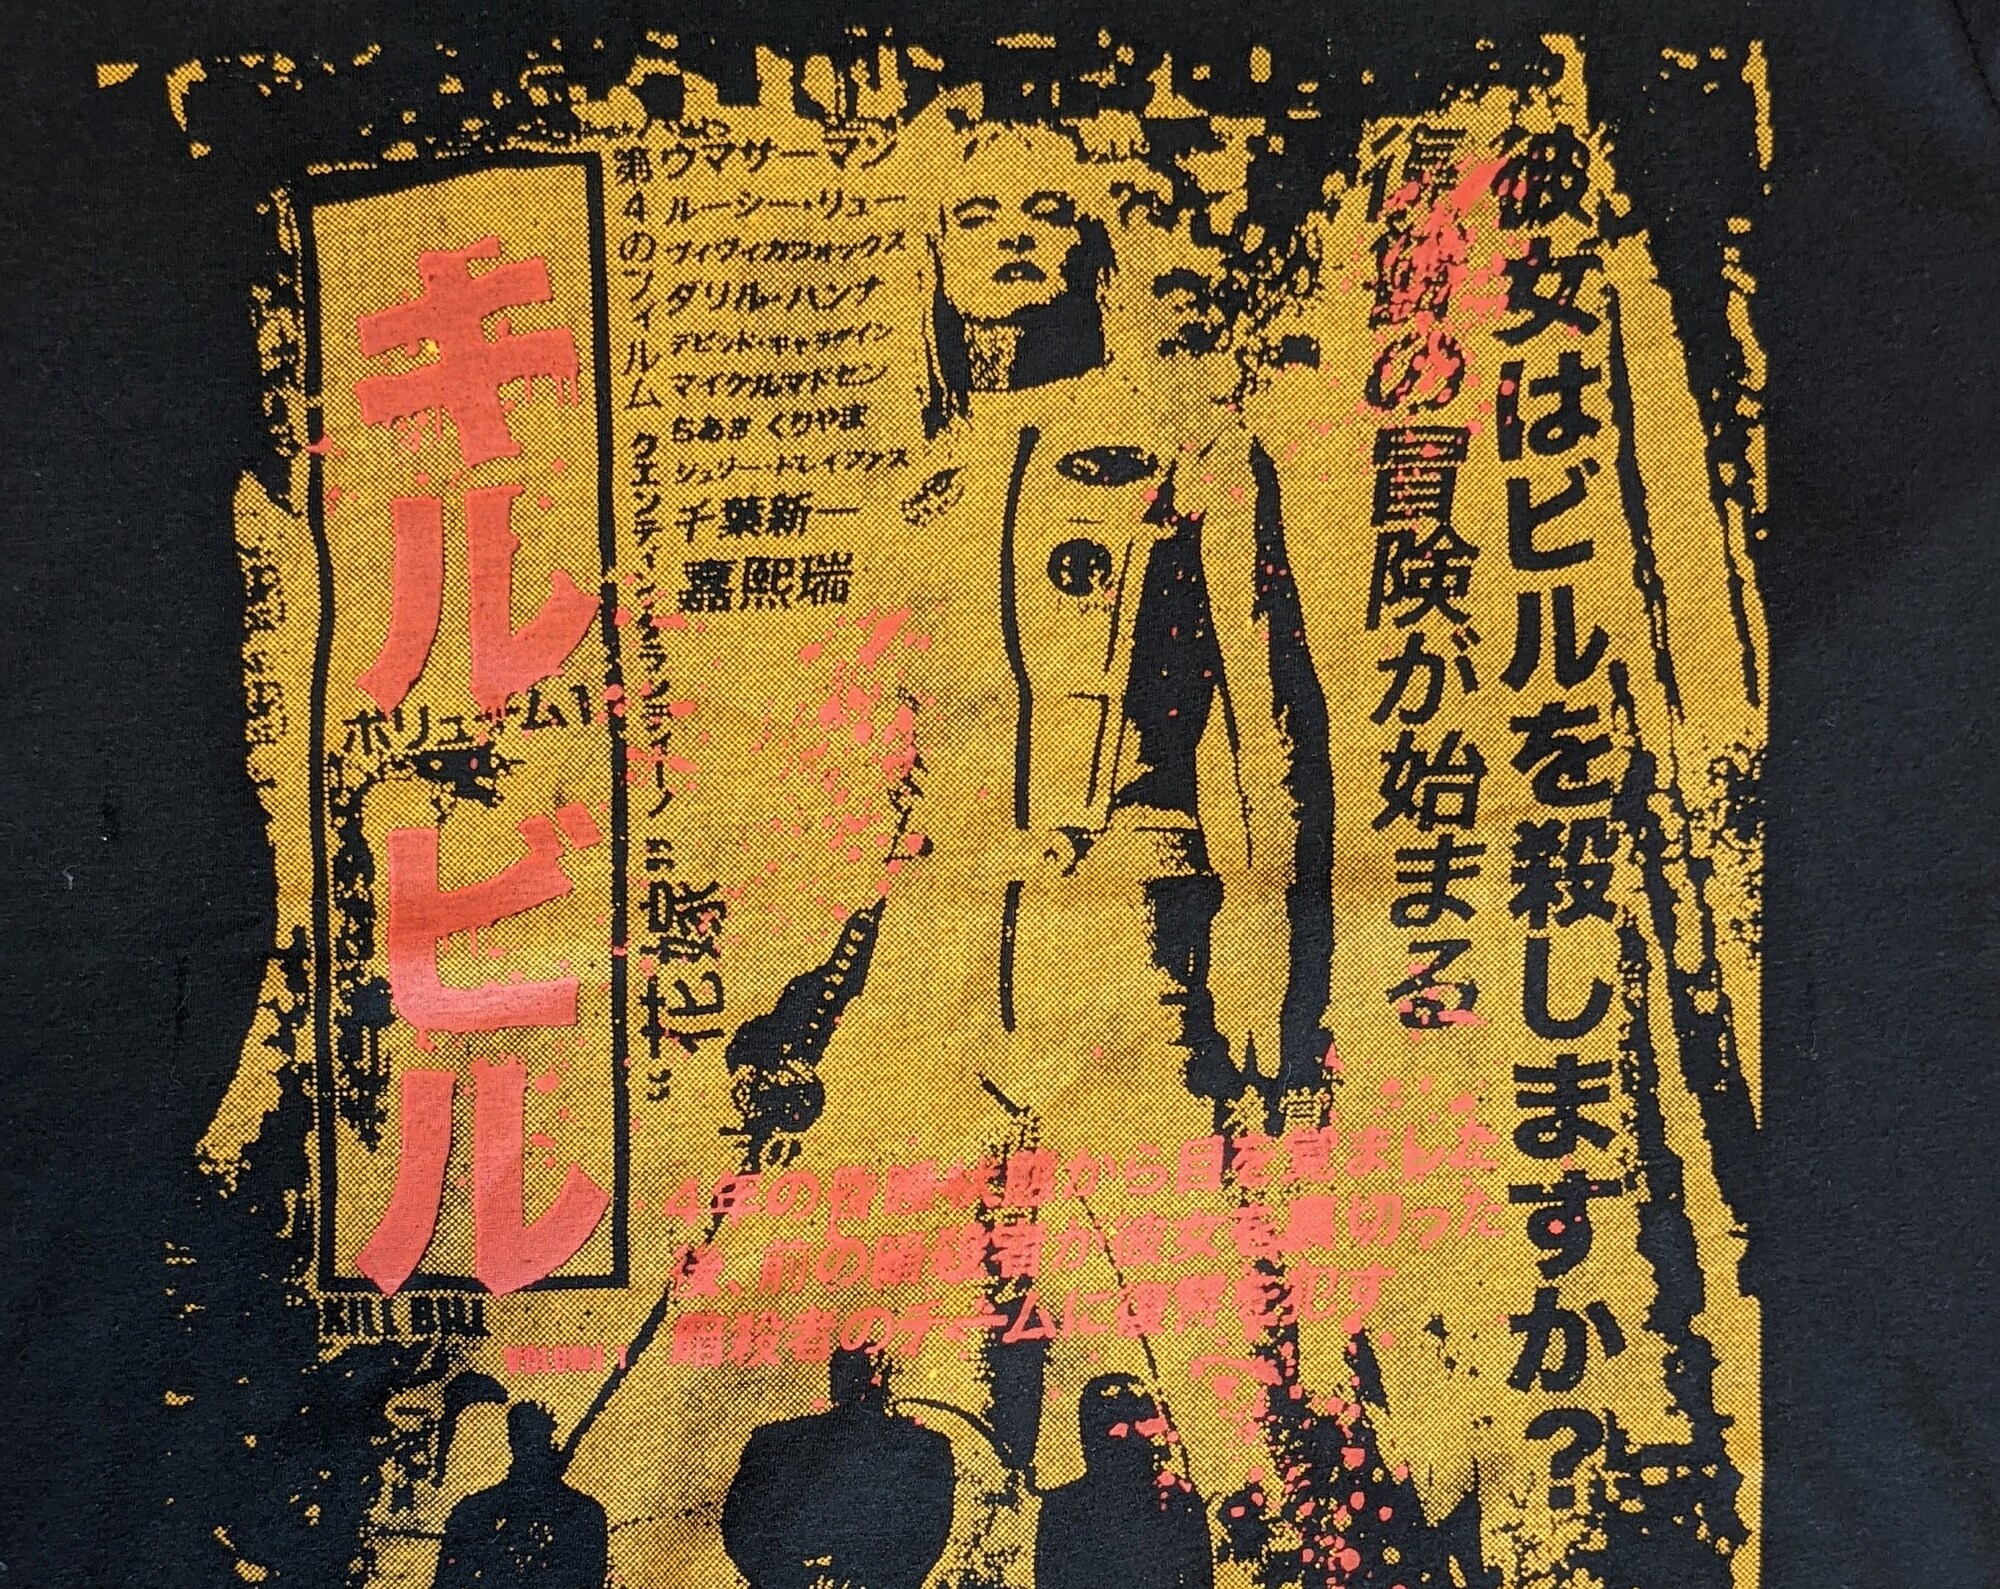 New KILL BILL: VOL 1 Uma Thurman Japanese Movie Poster Print